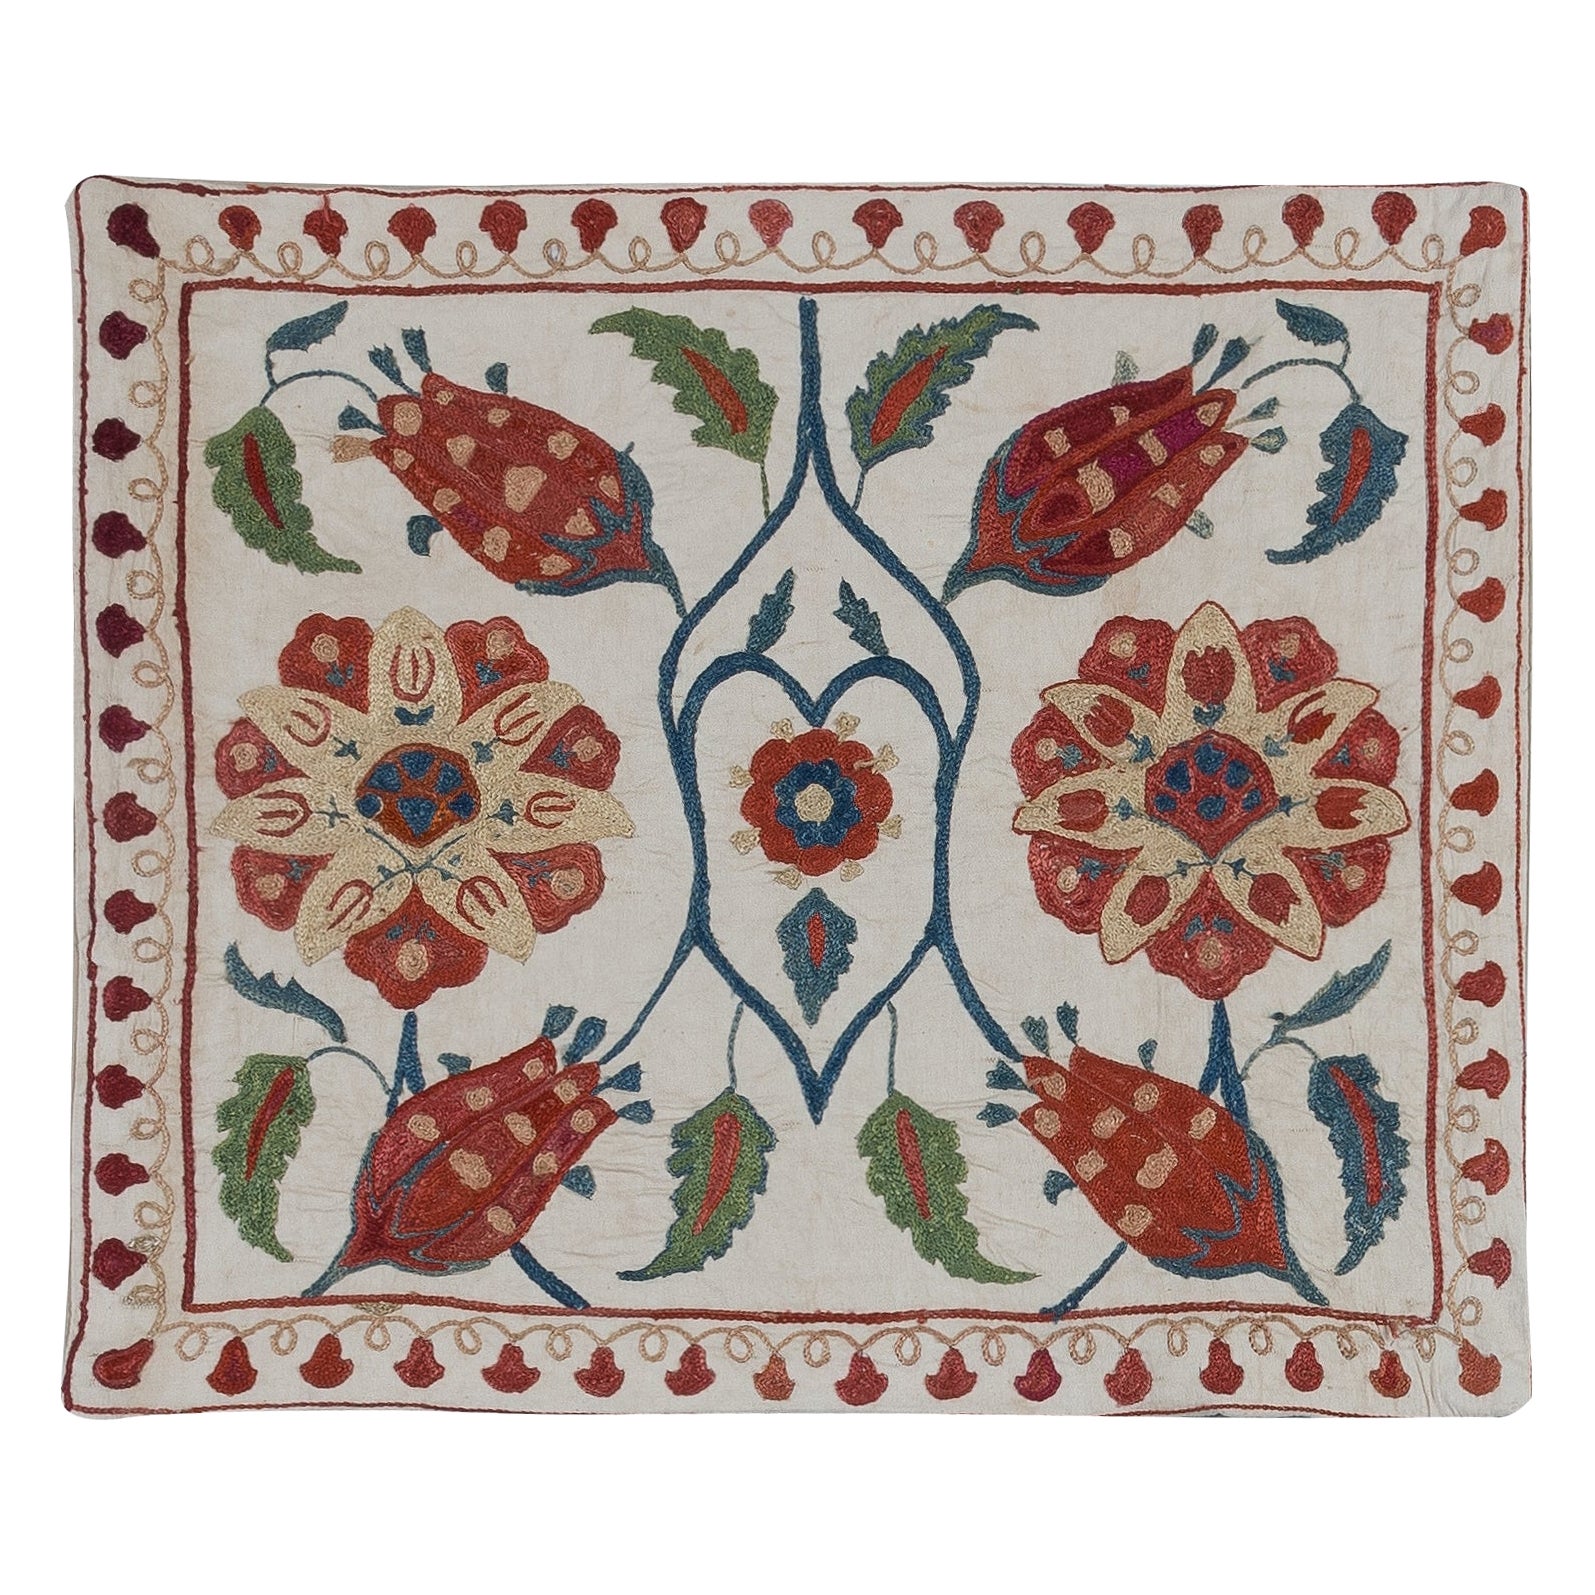 19"x22" 100% Silk Handmade Cushion Cover, Embroidered Uzbek Suzani Lace Pillow